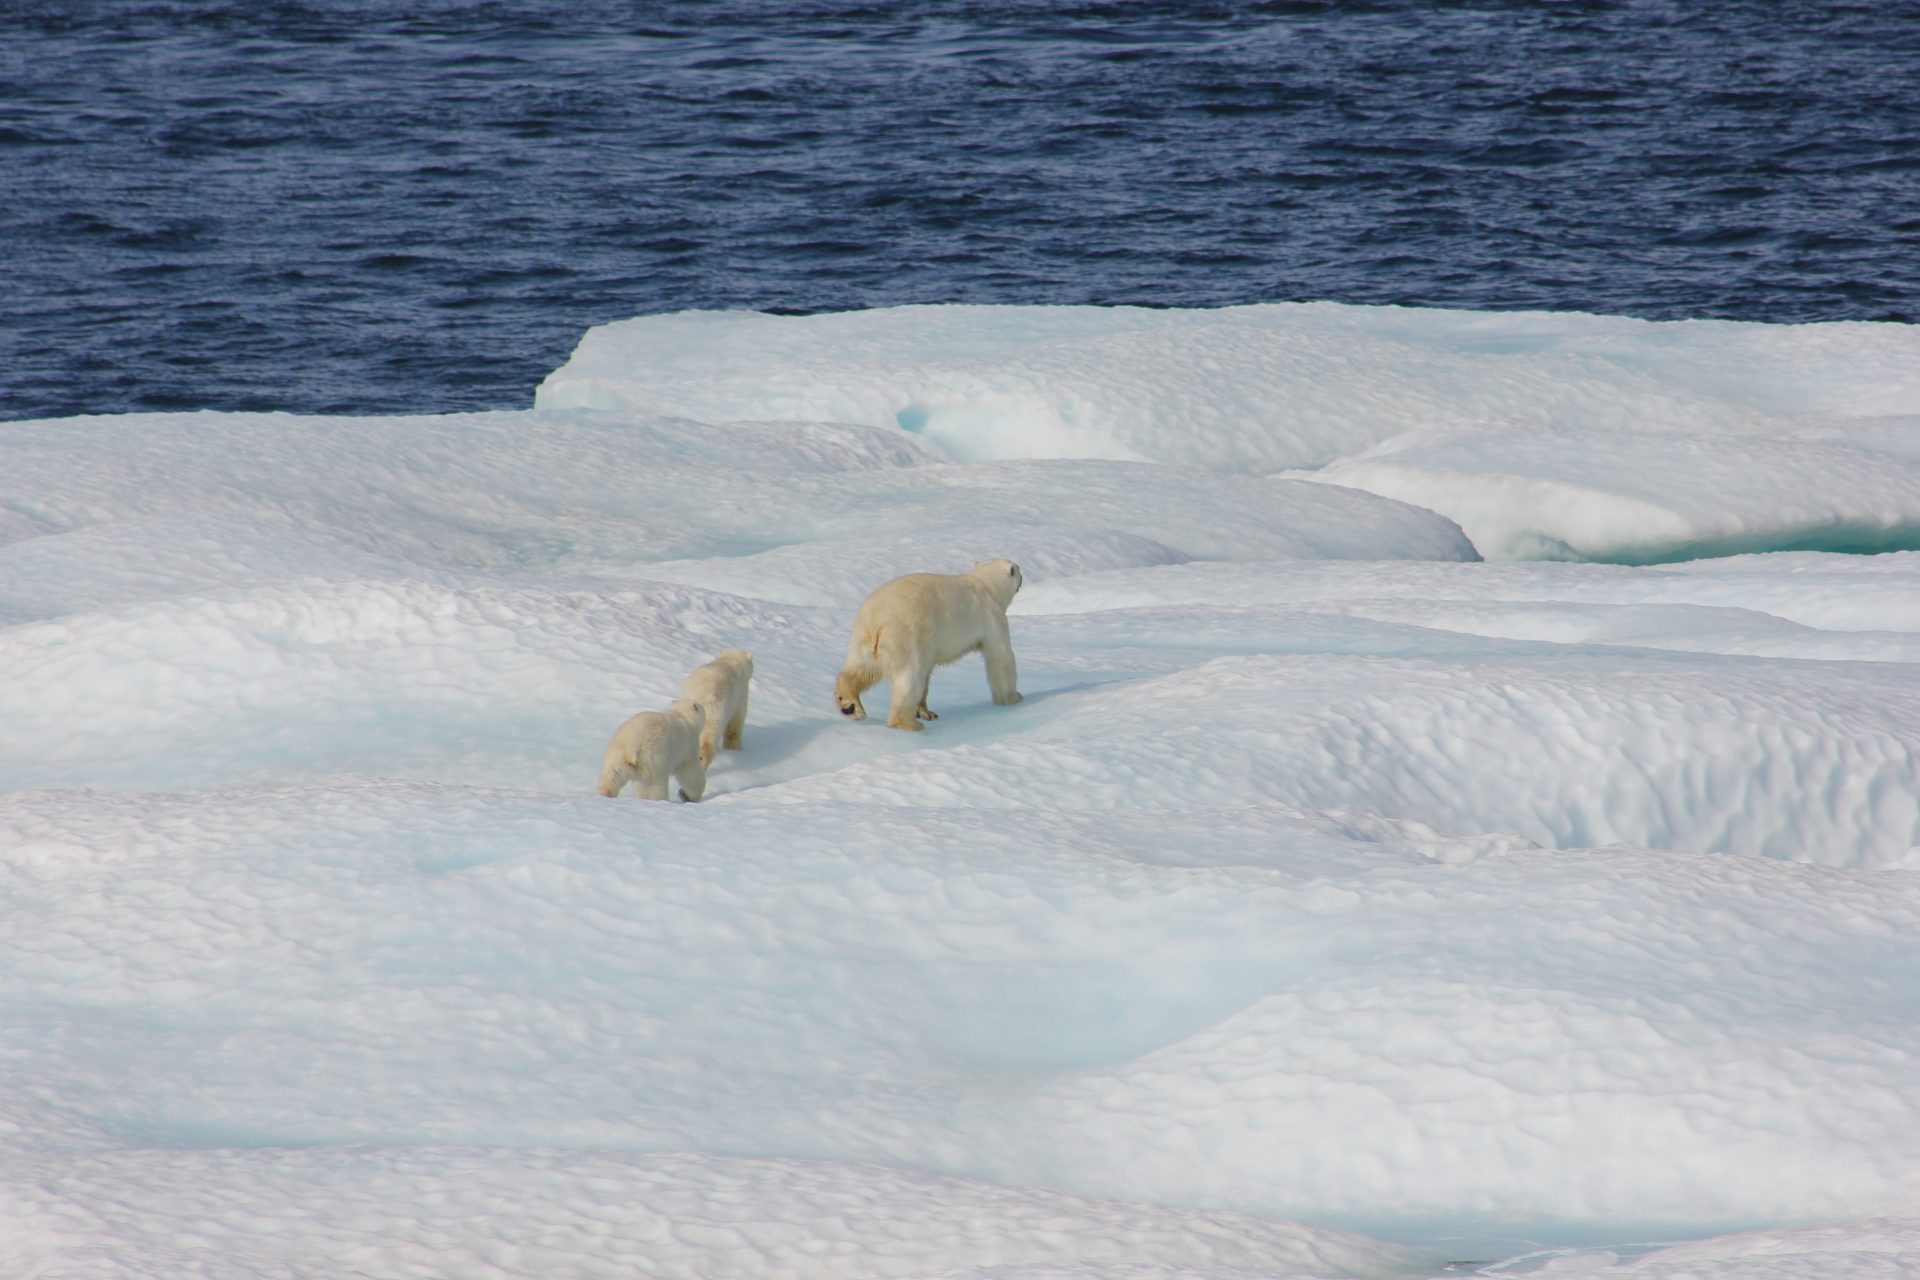 Global warming is melting the polar bears’ habitat 